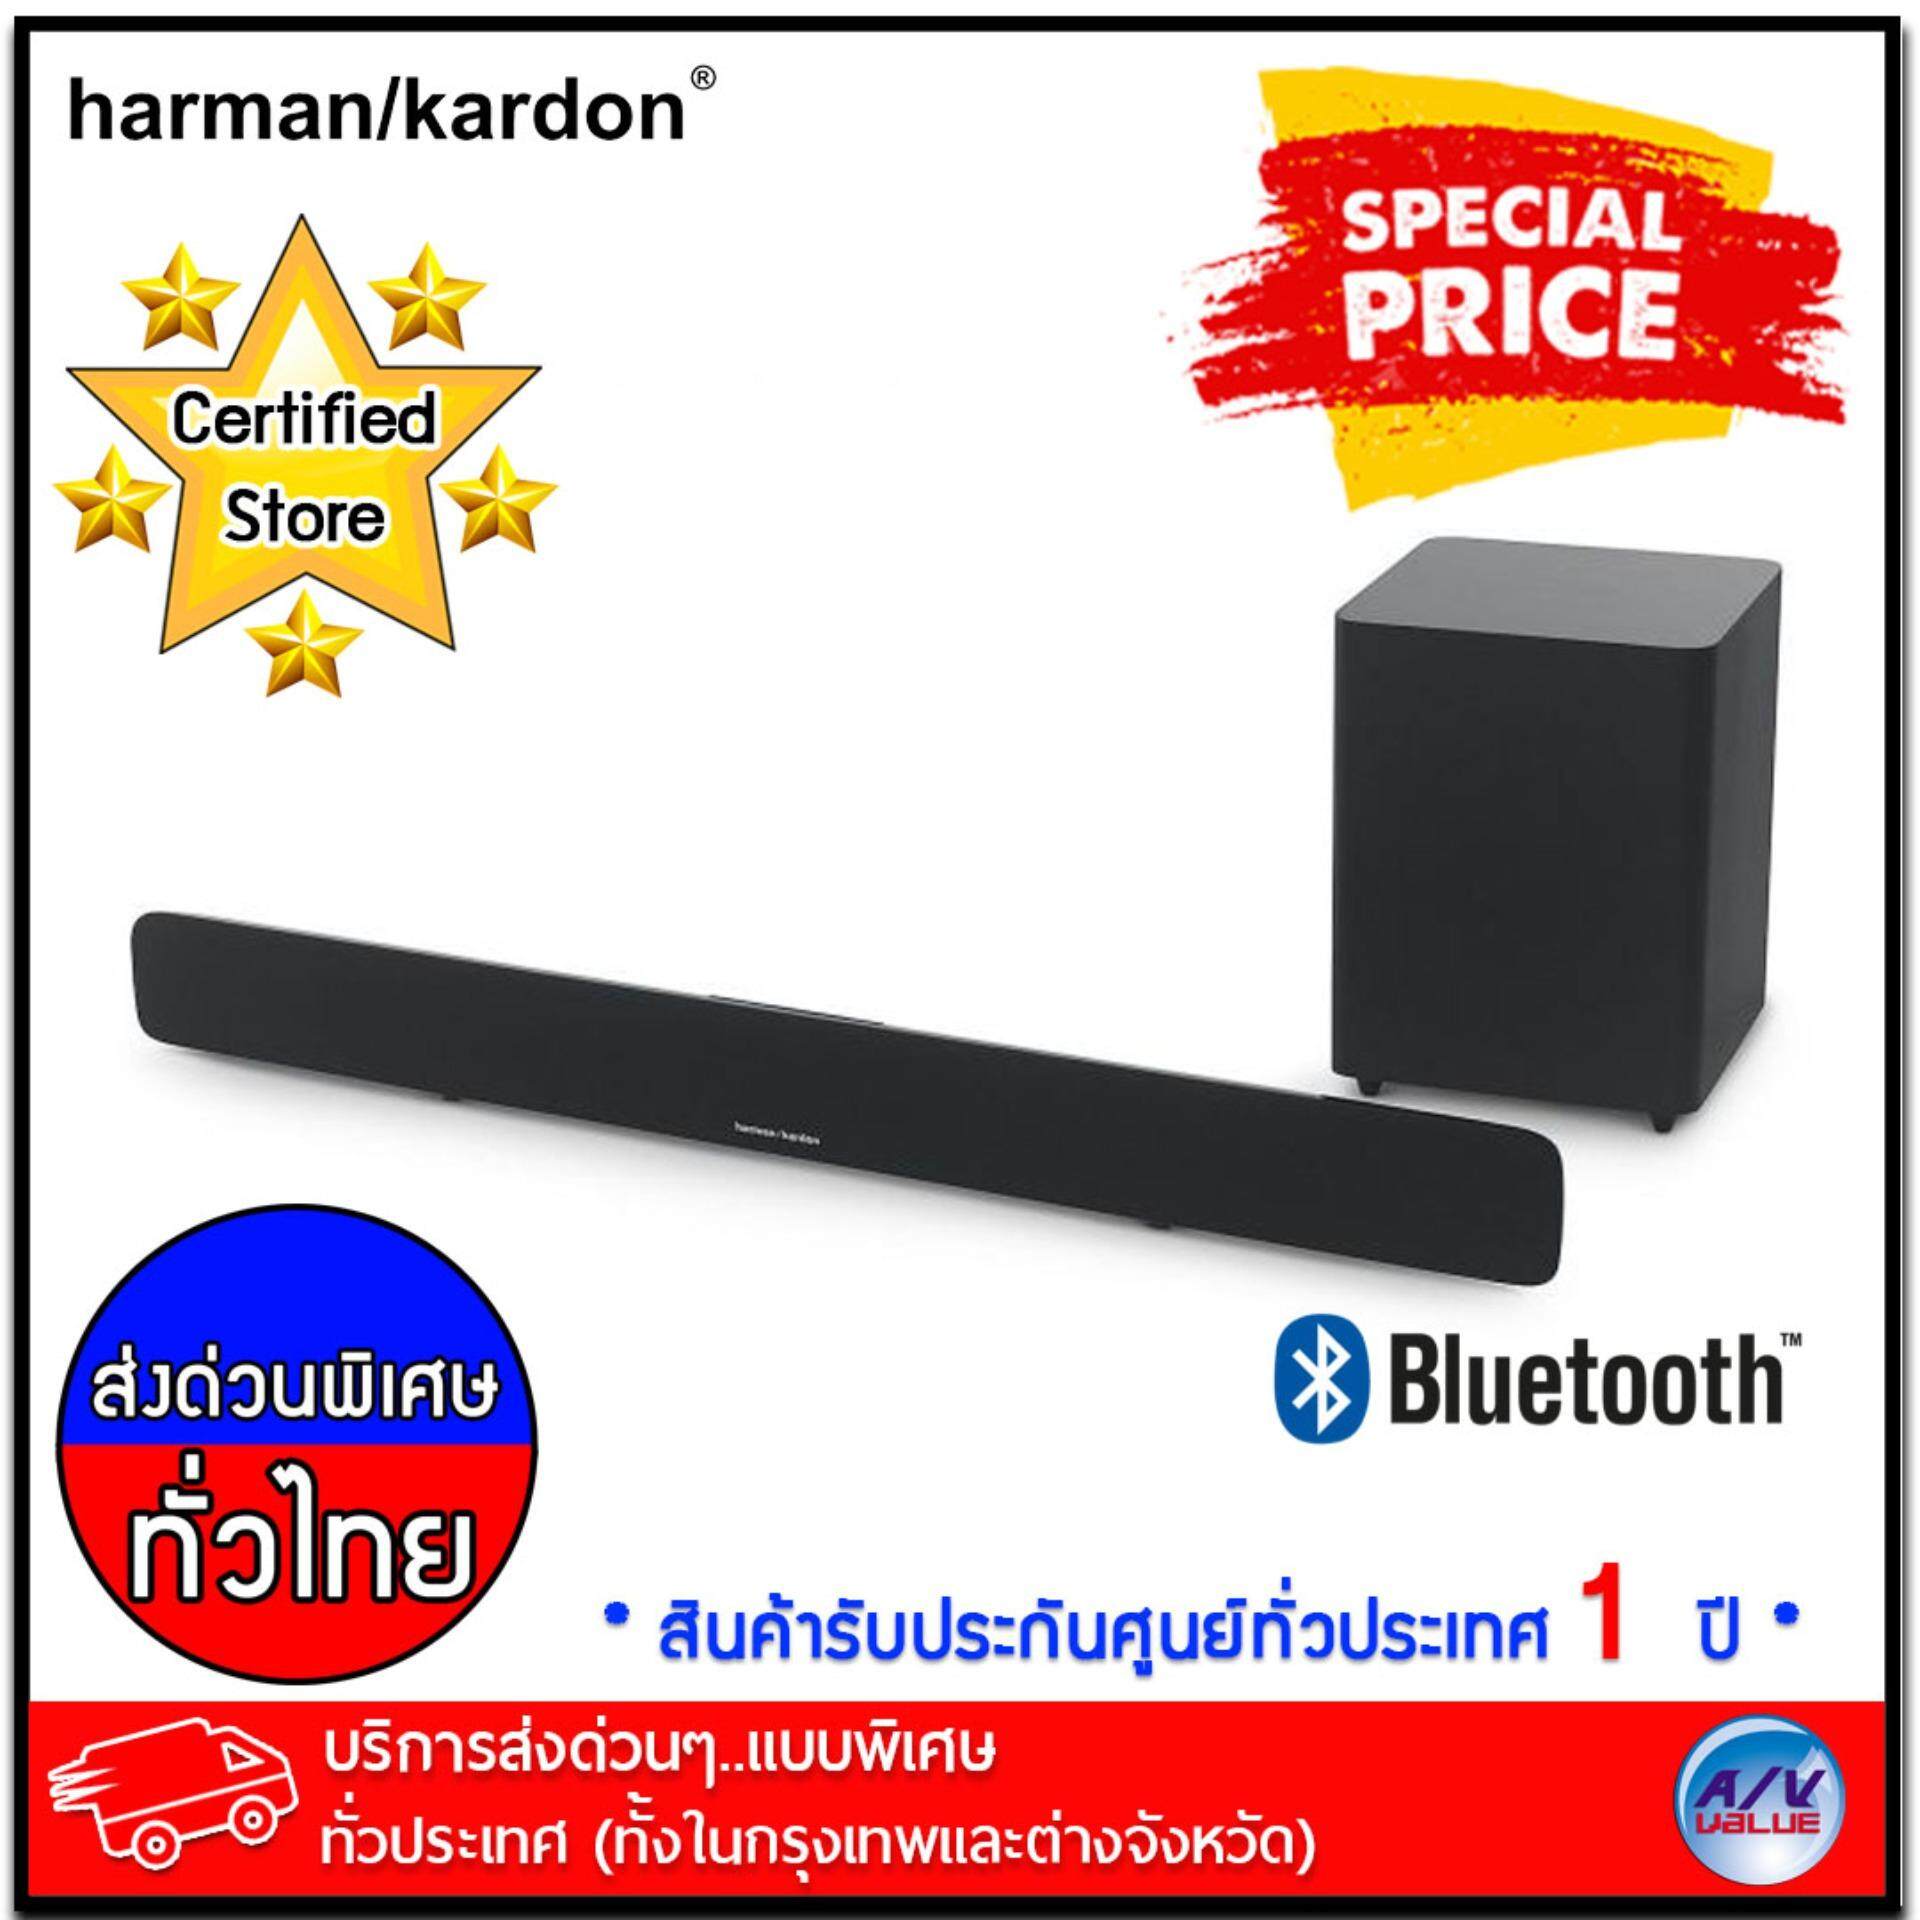 Harman Kardon SB 20 Advanced soundbar with Bluetooth and powerful wireless subwoofer (HK SB20) บริการส่งด่วนแบบพิเศษ!ทั่วประเทศ (ทั้งในกรุงเทพและต่างจังหวัด)